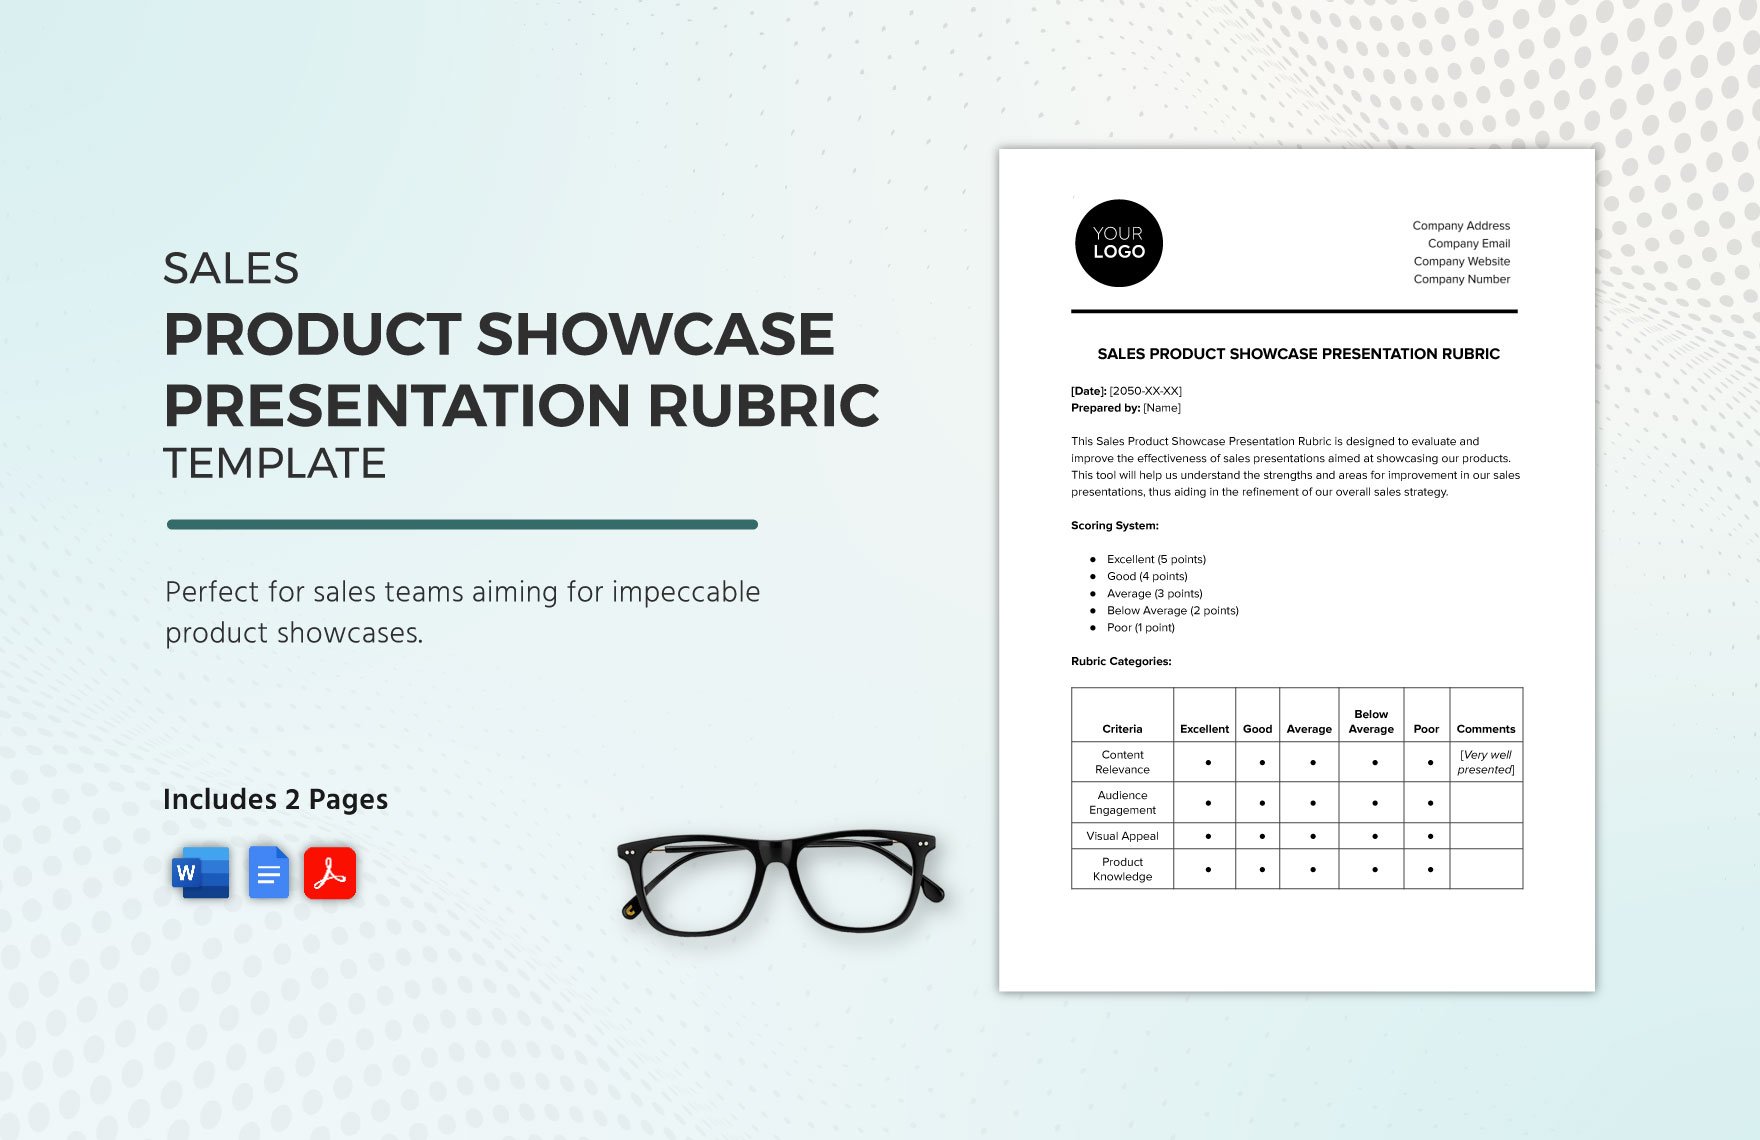 Sales Product Showcase Presentation Rubric Template